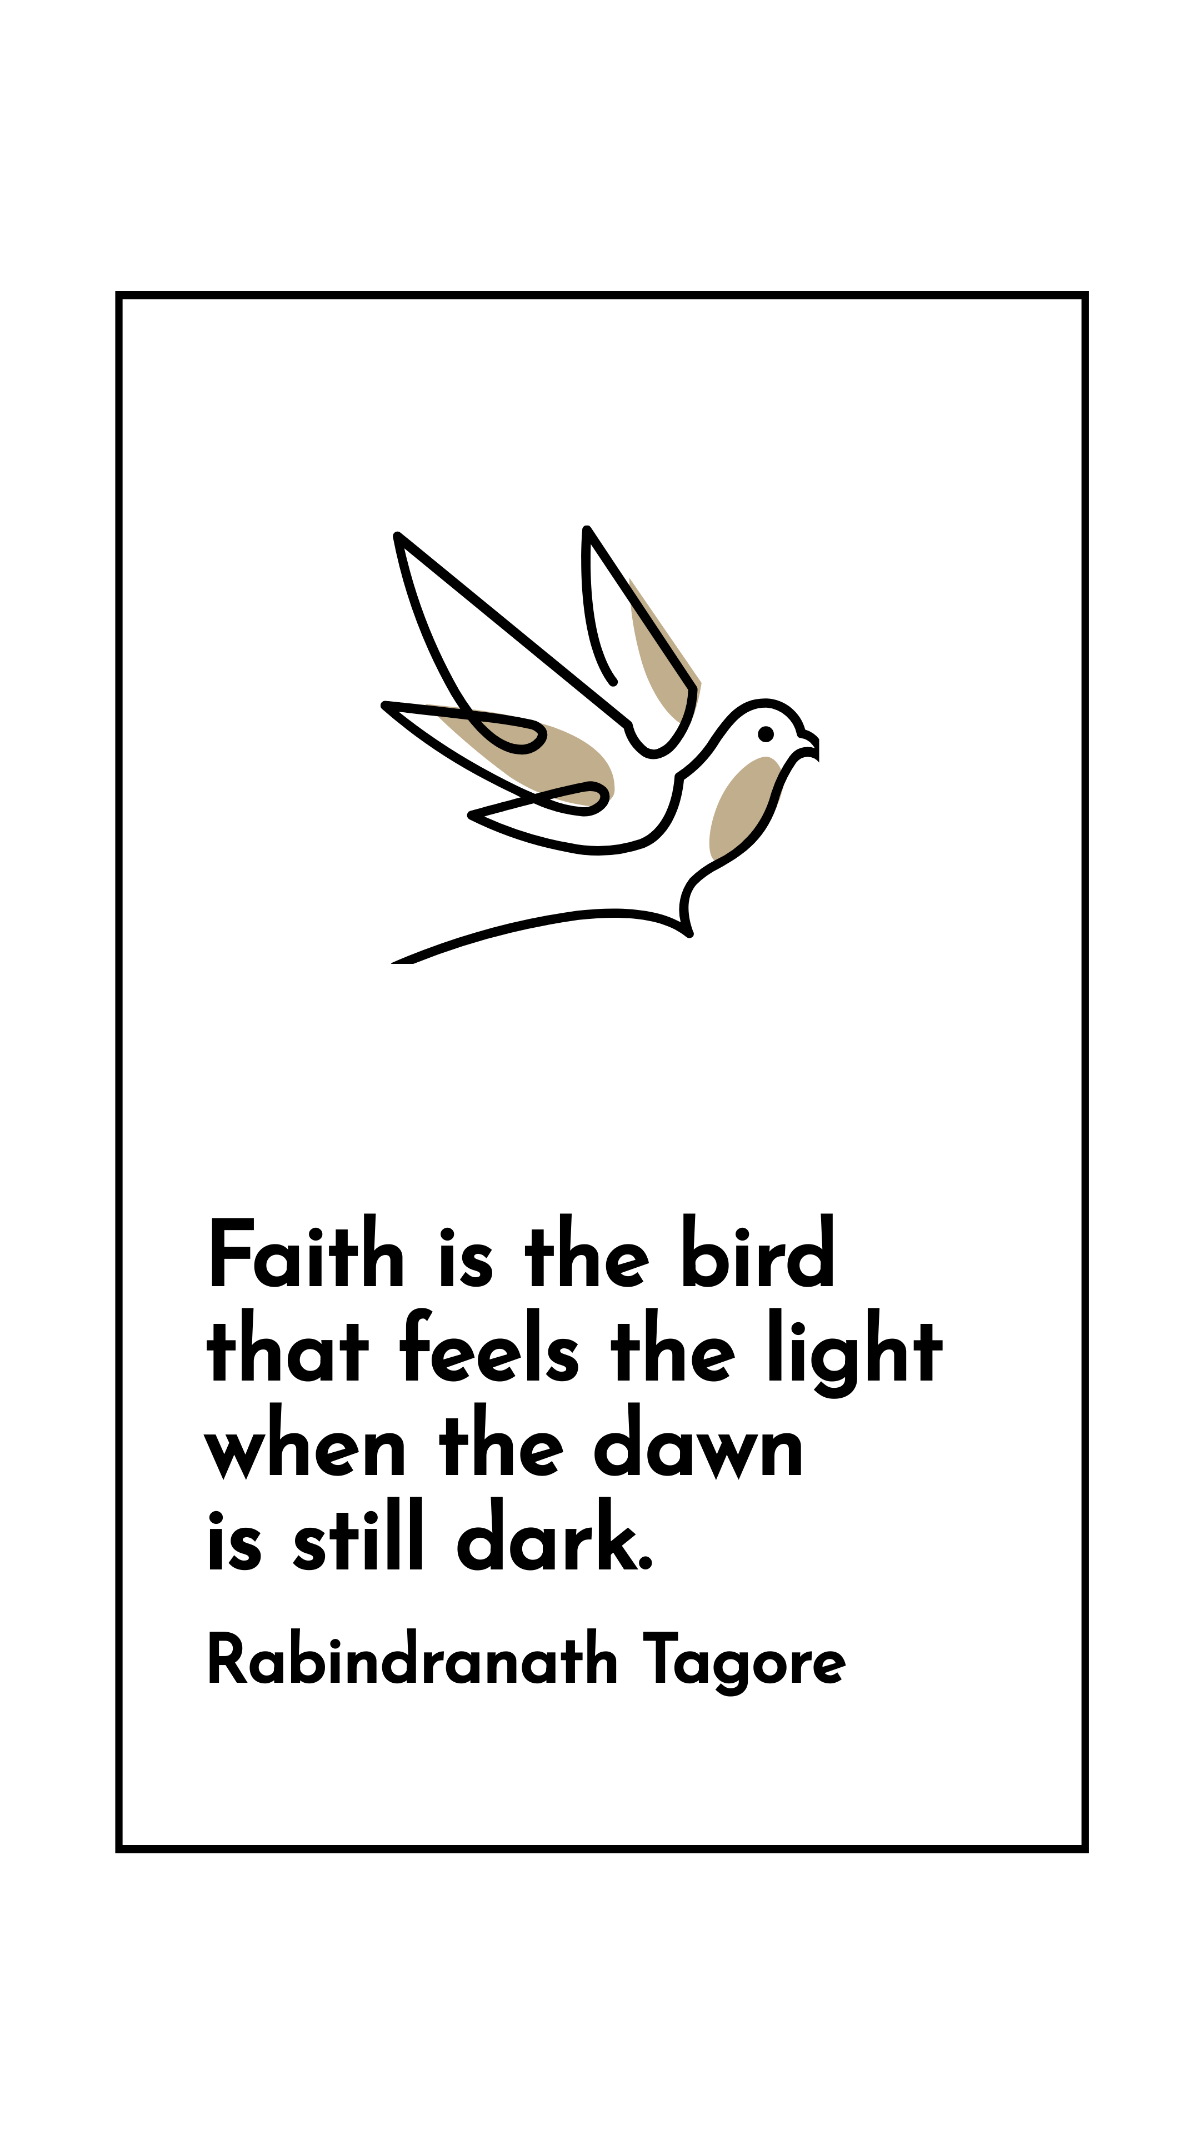 Rabindranath Tagore - Faith is the bird that feels the light when the dawn is still dark.